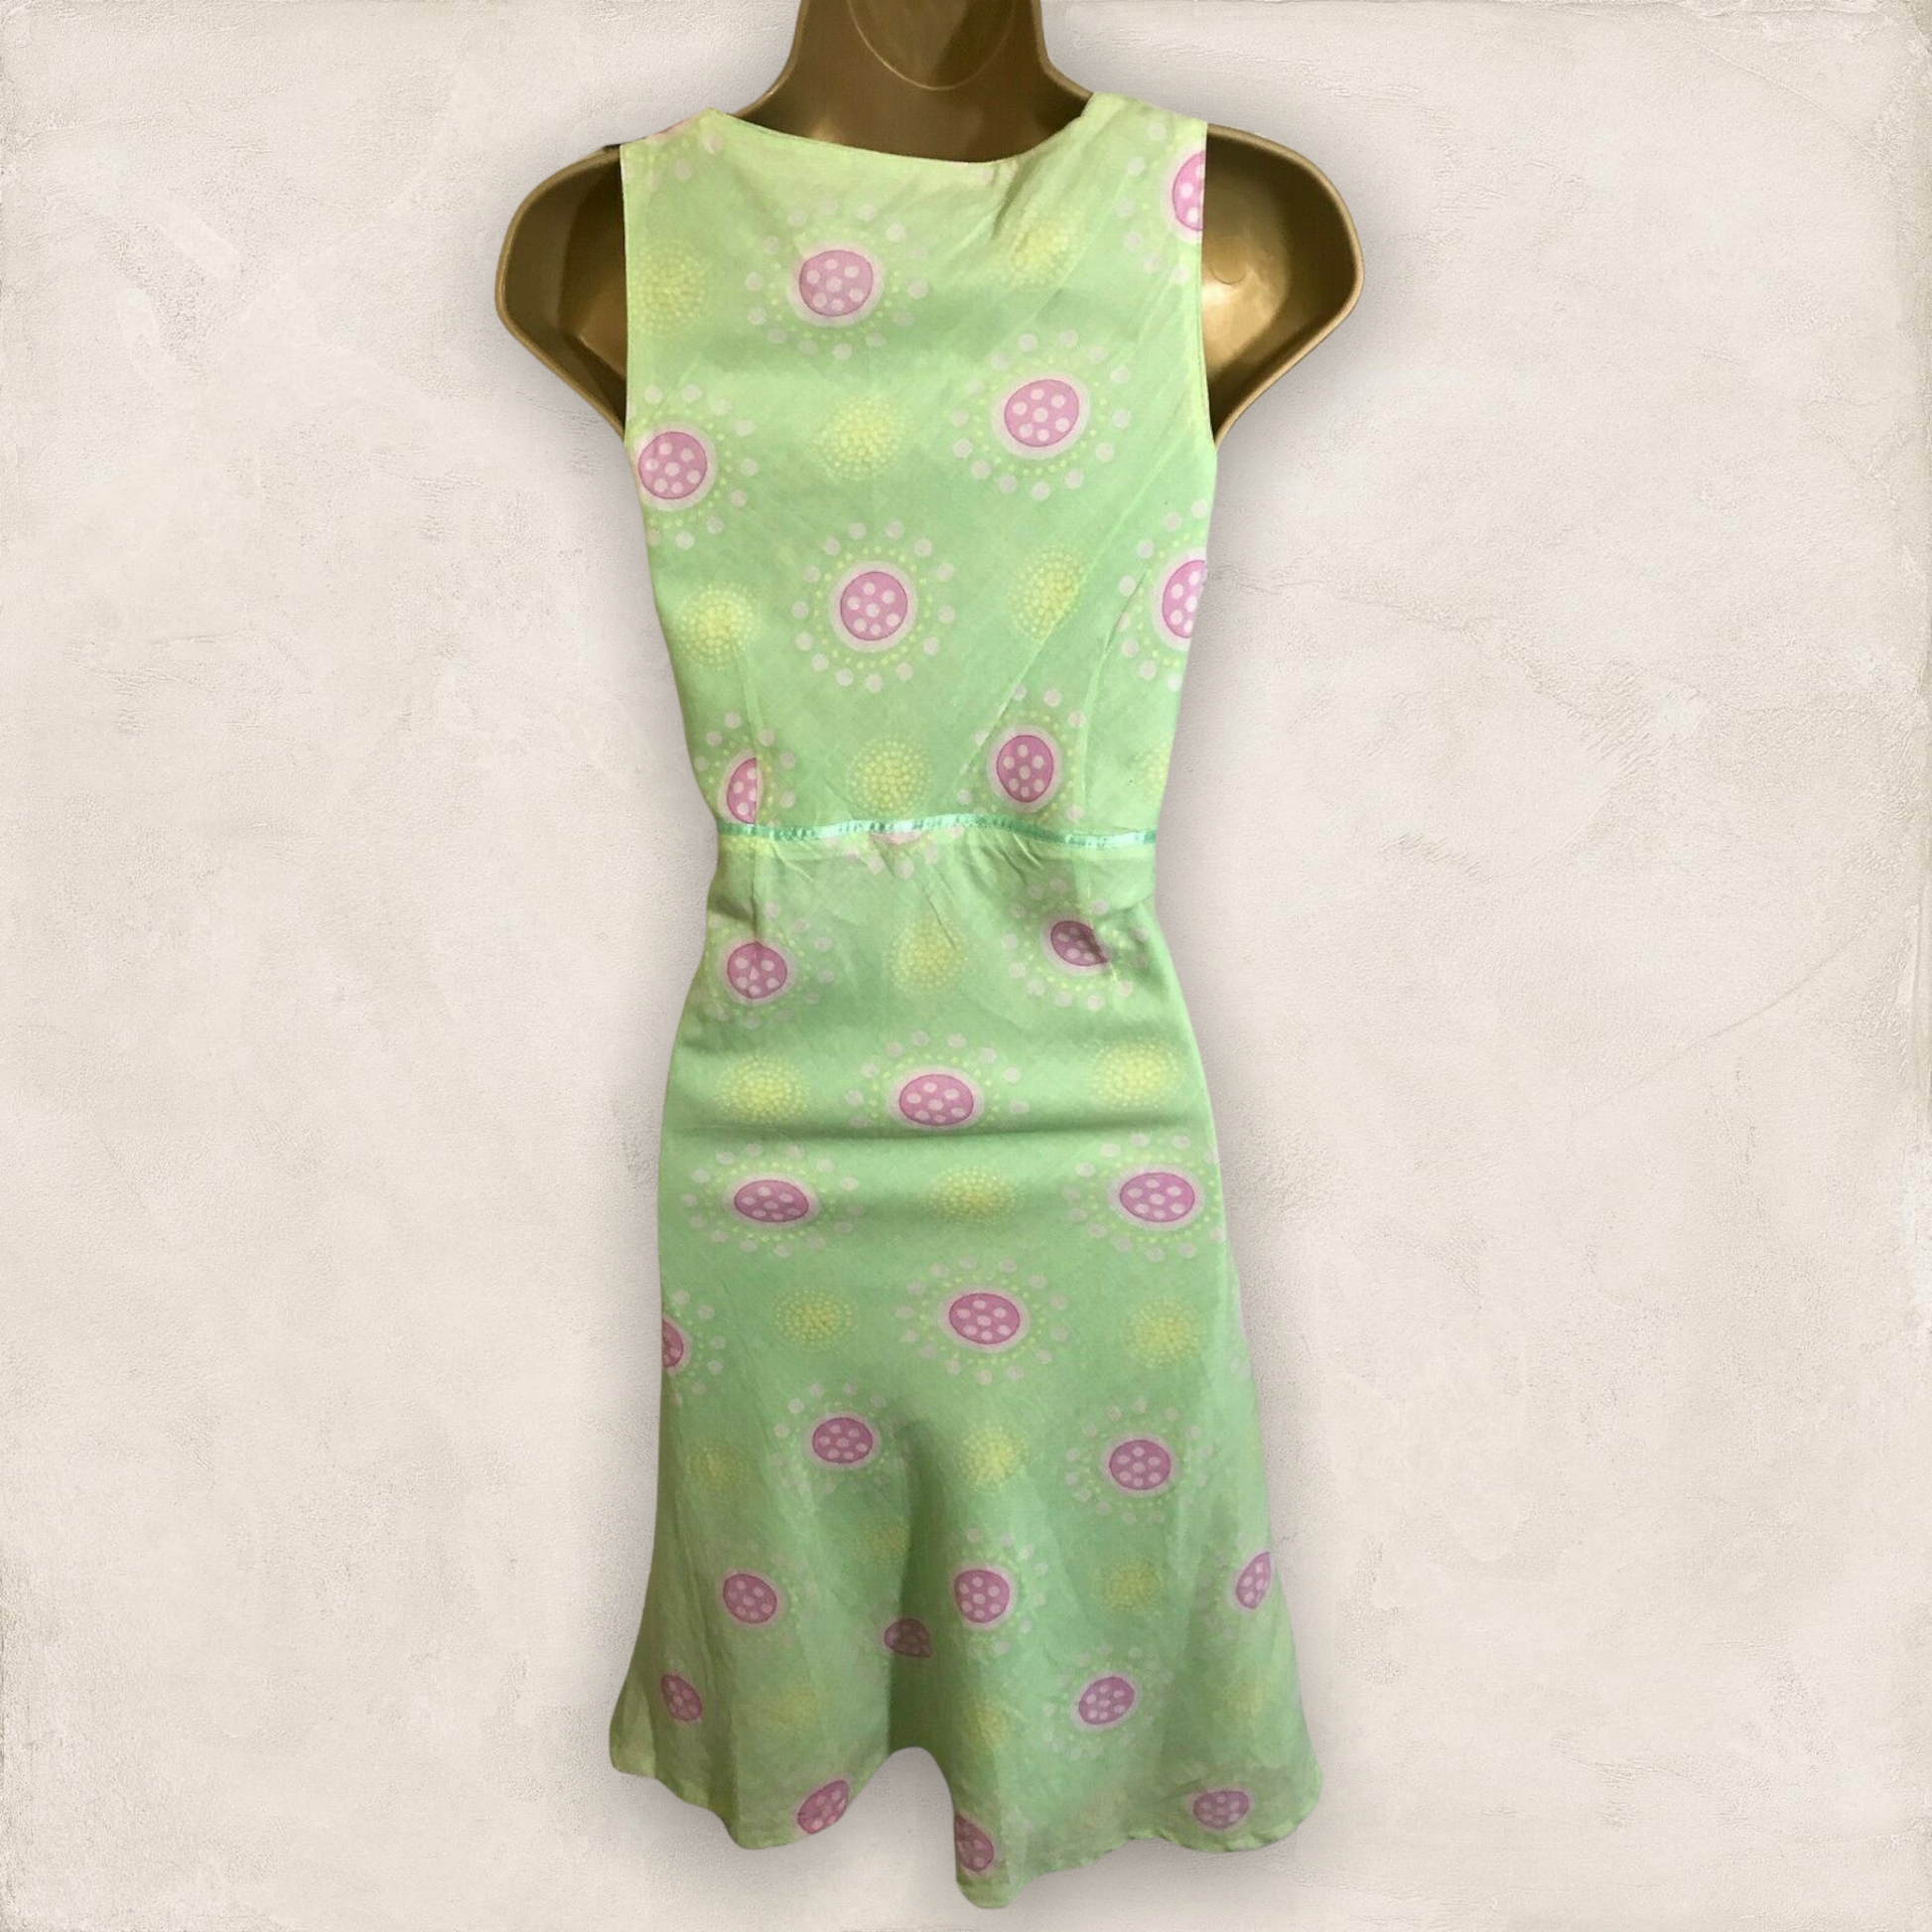 Joules Green & Pink Cotton Summer Dress UK 8 US 4 EU 36 Timeless Fashions